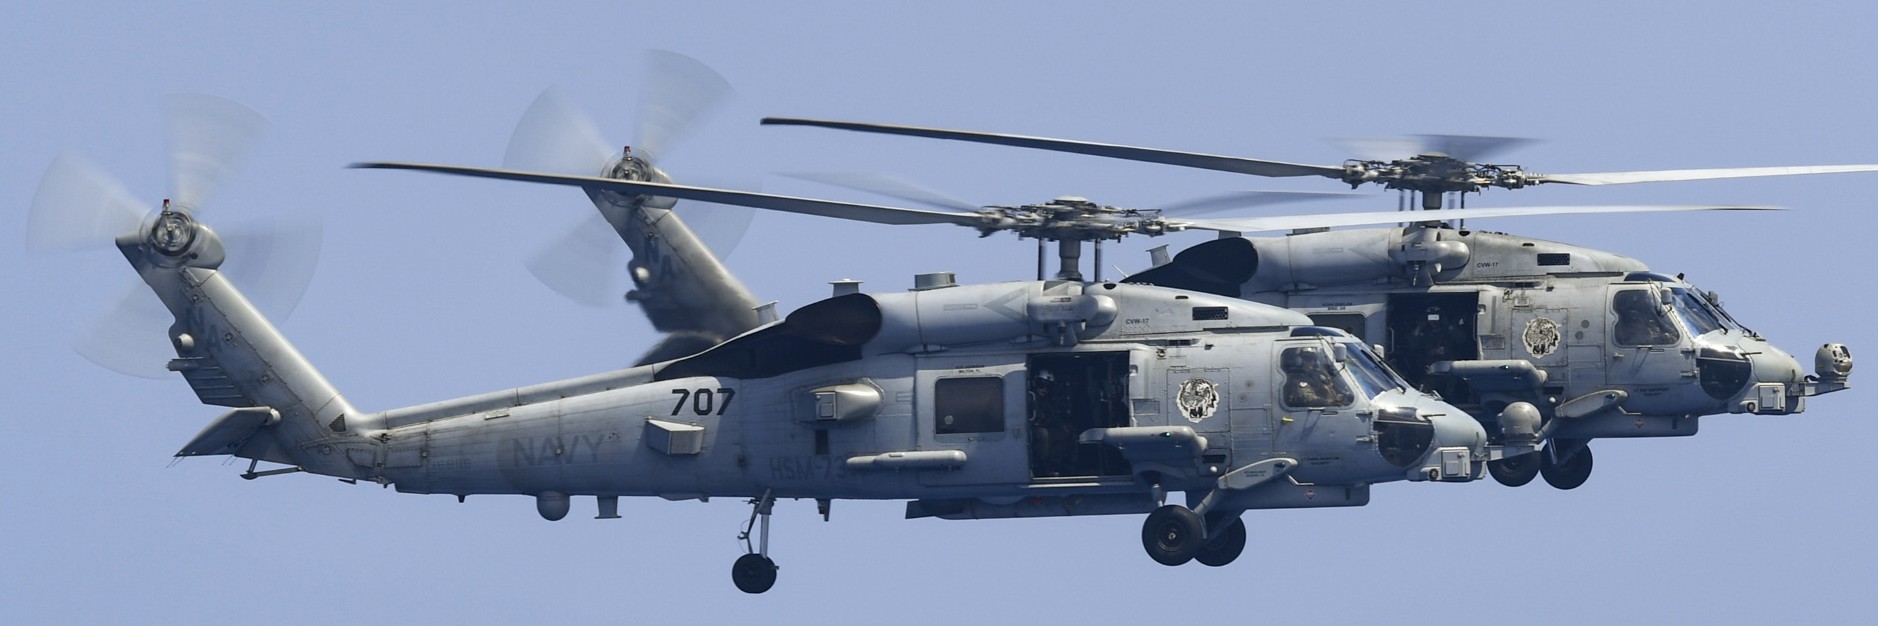 hsm-73 battlecats helicopter maritime strike squadron mh-60r seahawk cvw-17 cvn-71 uss theodore roosevelt 28